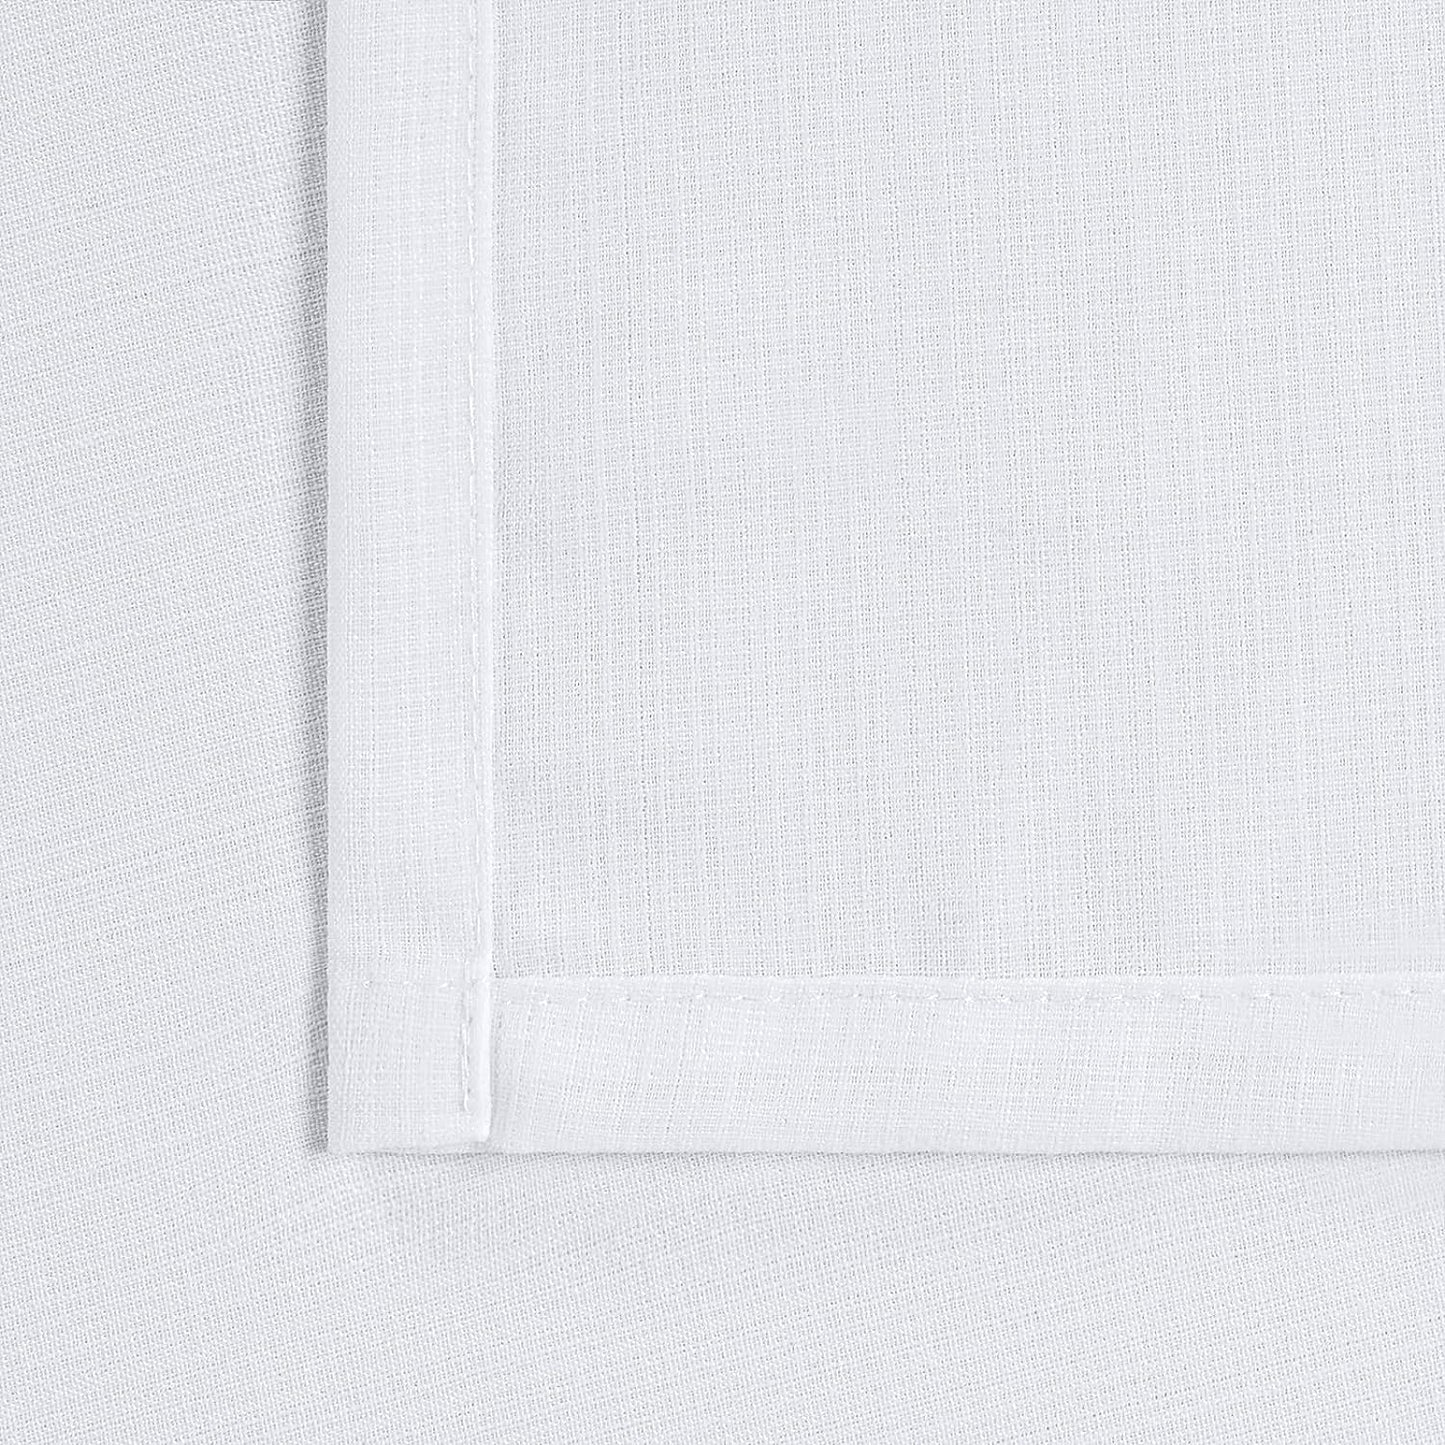 Bgment White Semi Sheer Curtains 95 Inch for Bedroom, Linen Look Rod Pocket Light Filtering Privacy Sheer Curtains for Living Room, Opaque White Sheer Curtains 2 Panels, Each 42 X 95 Inch  BGment   